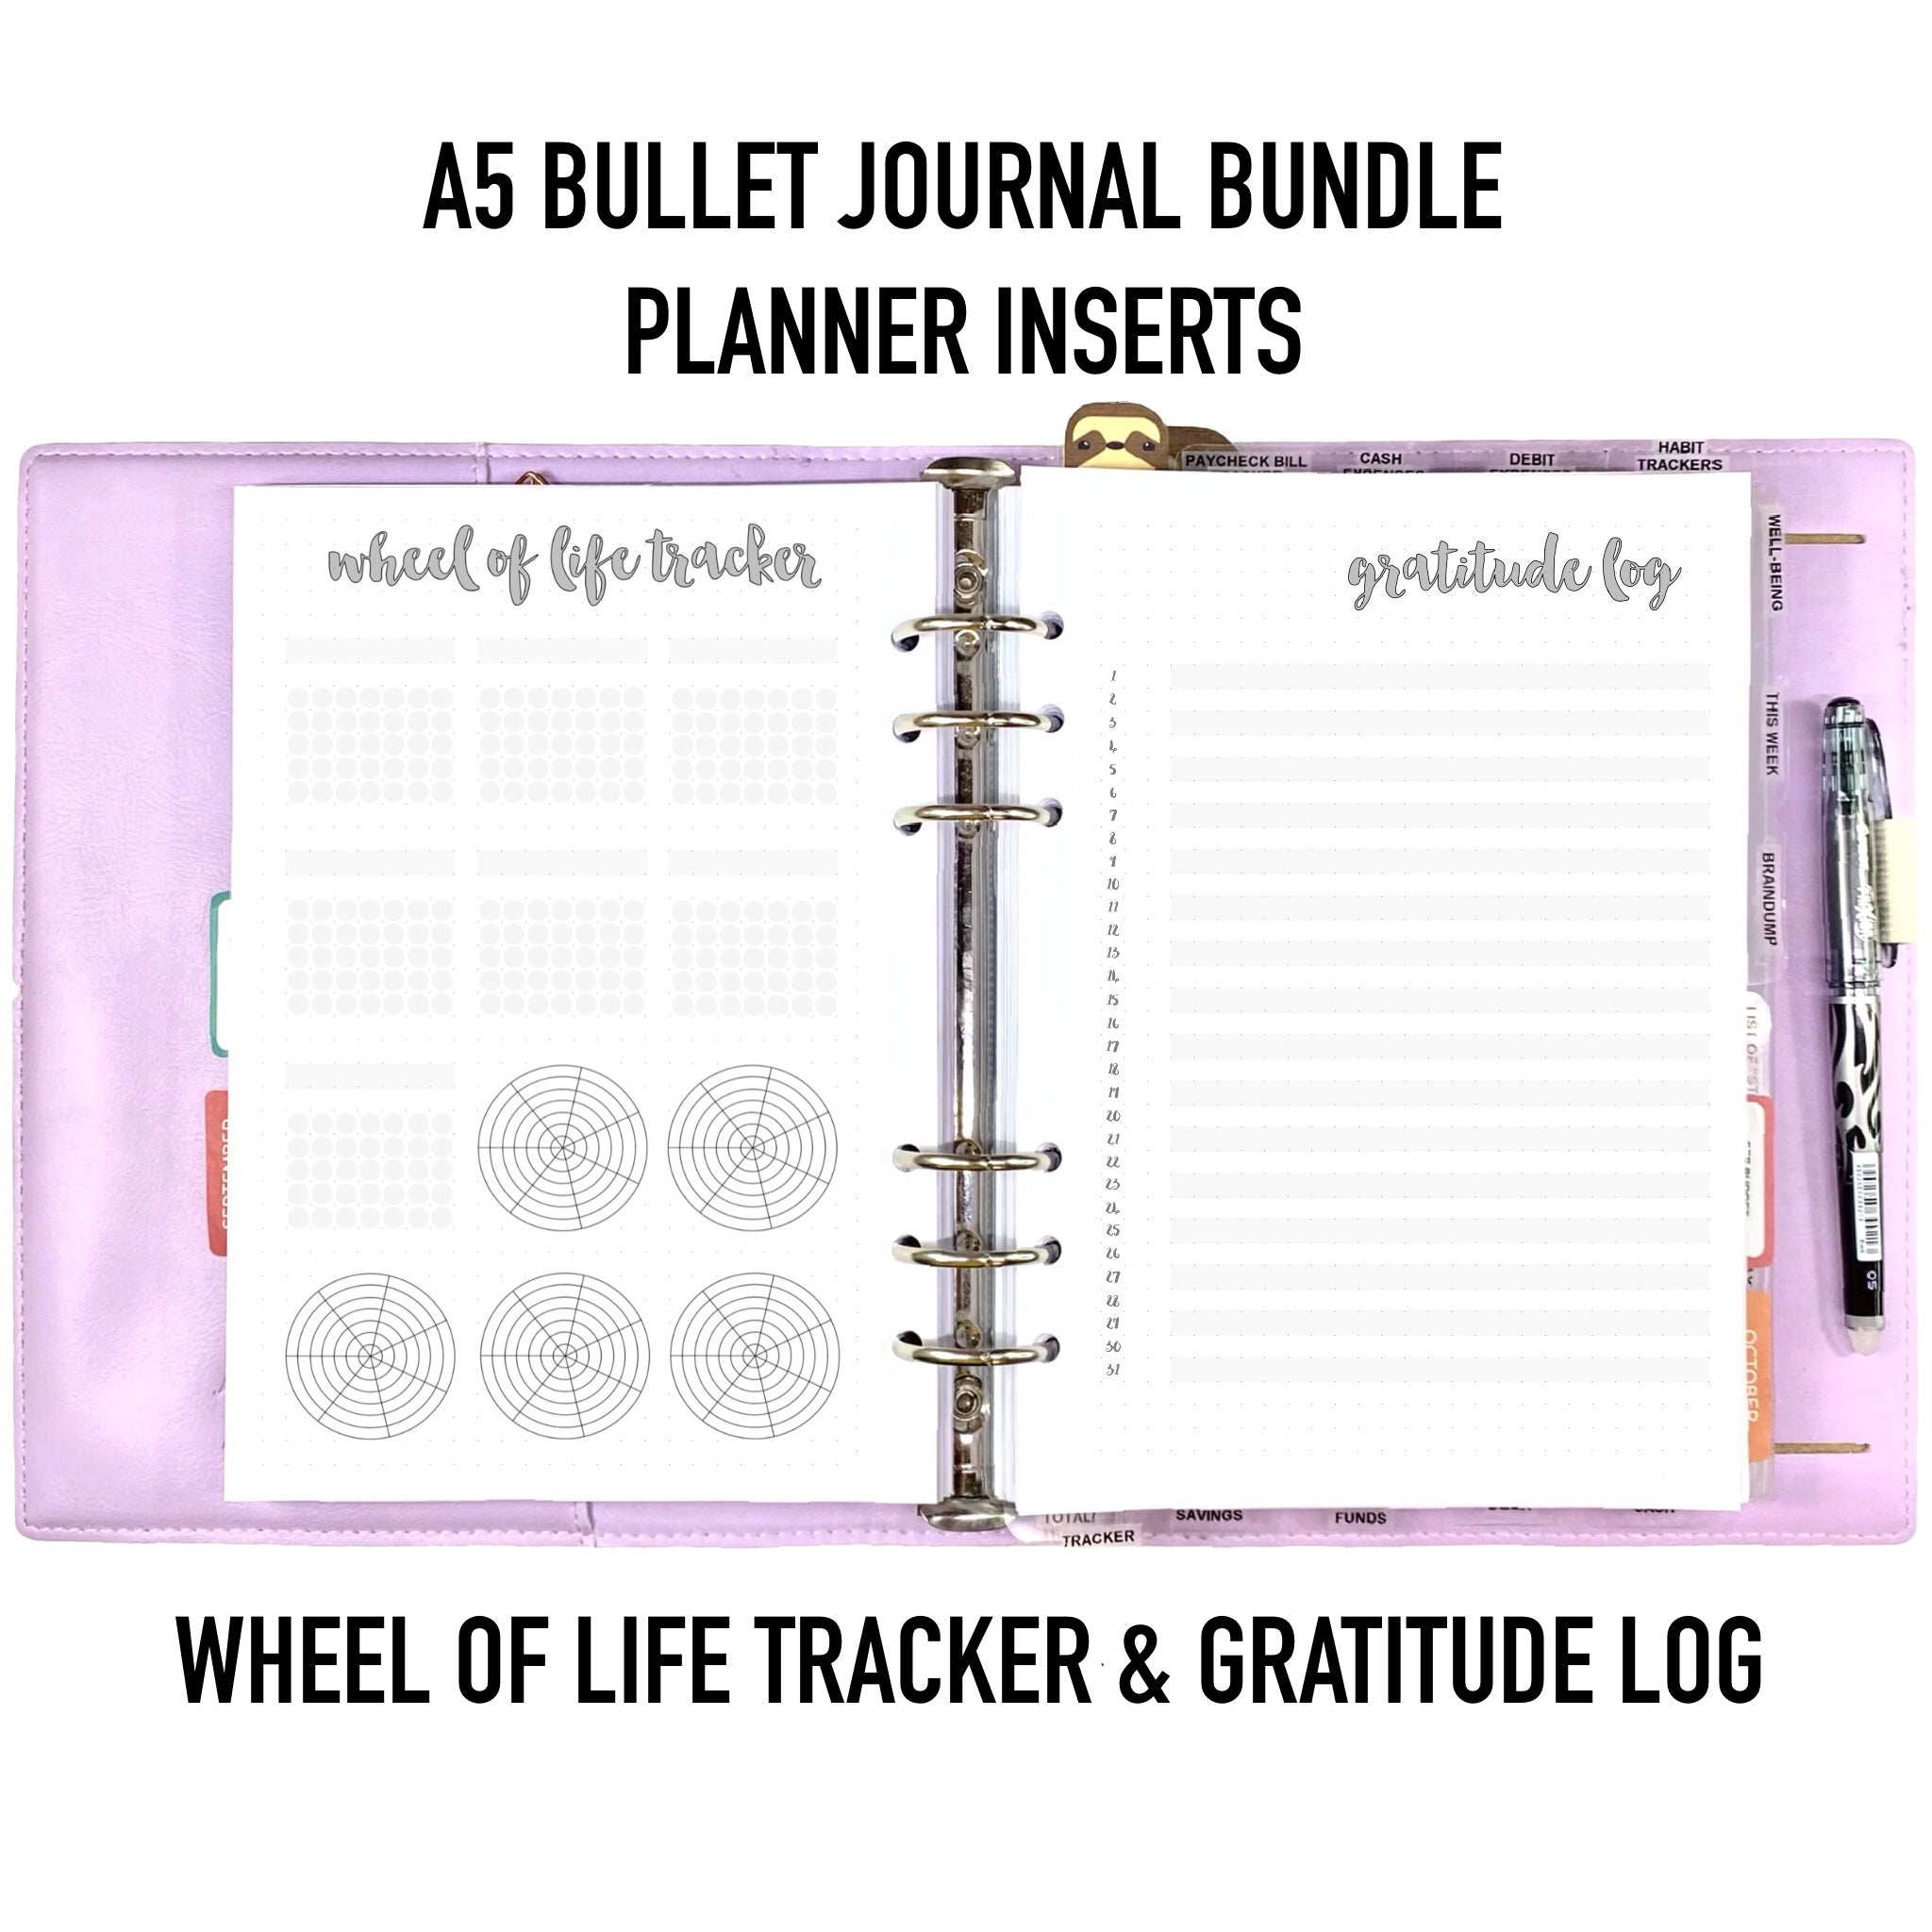 A5 Bullet Journal Style Habit, Mood & Sleep Trackers Planner Inserts P –  MarianeCresp